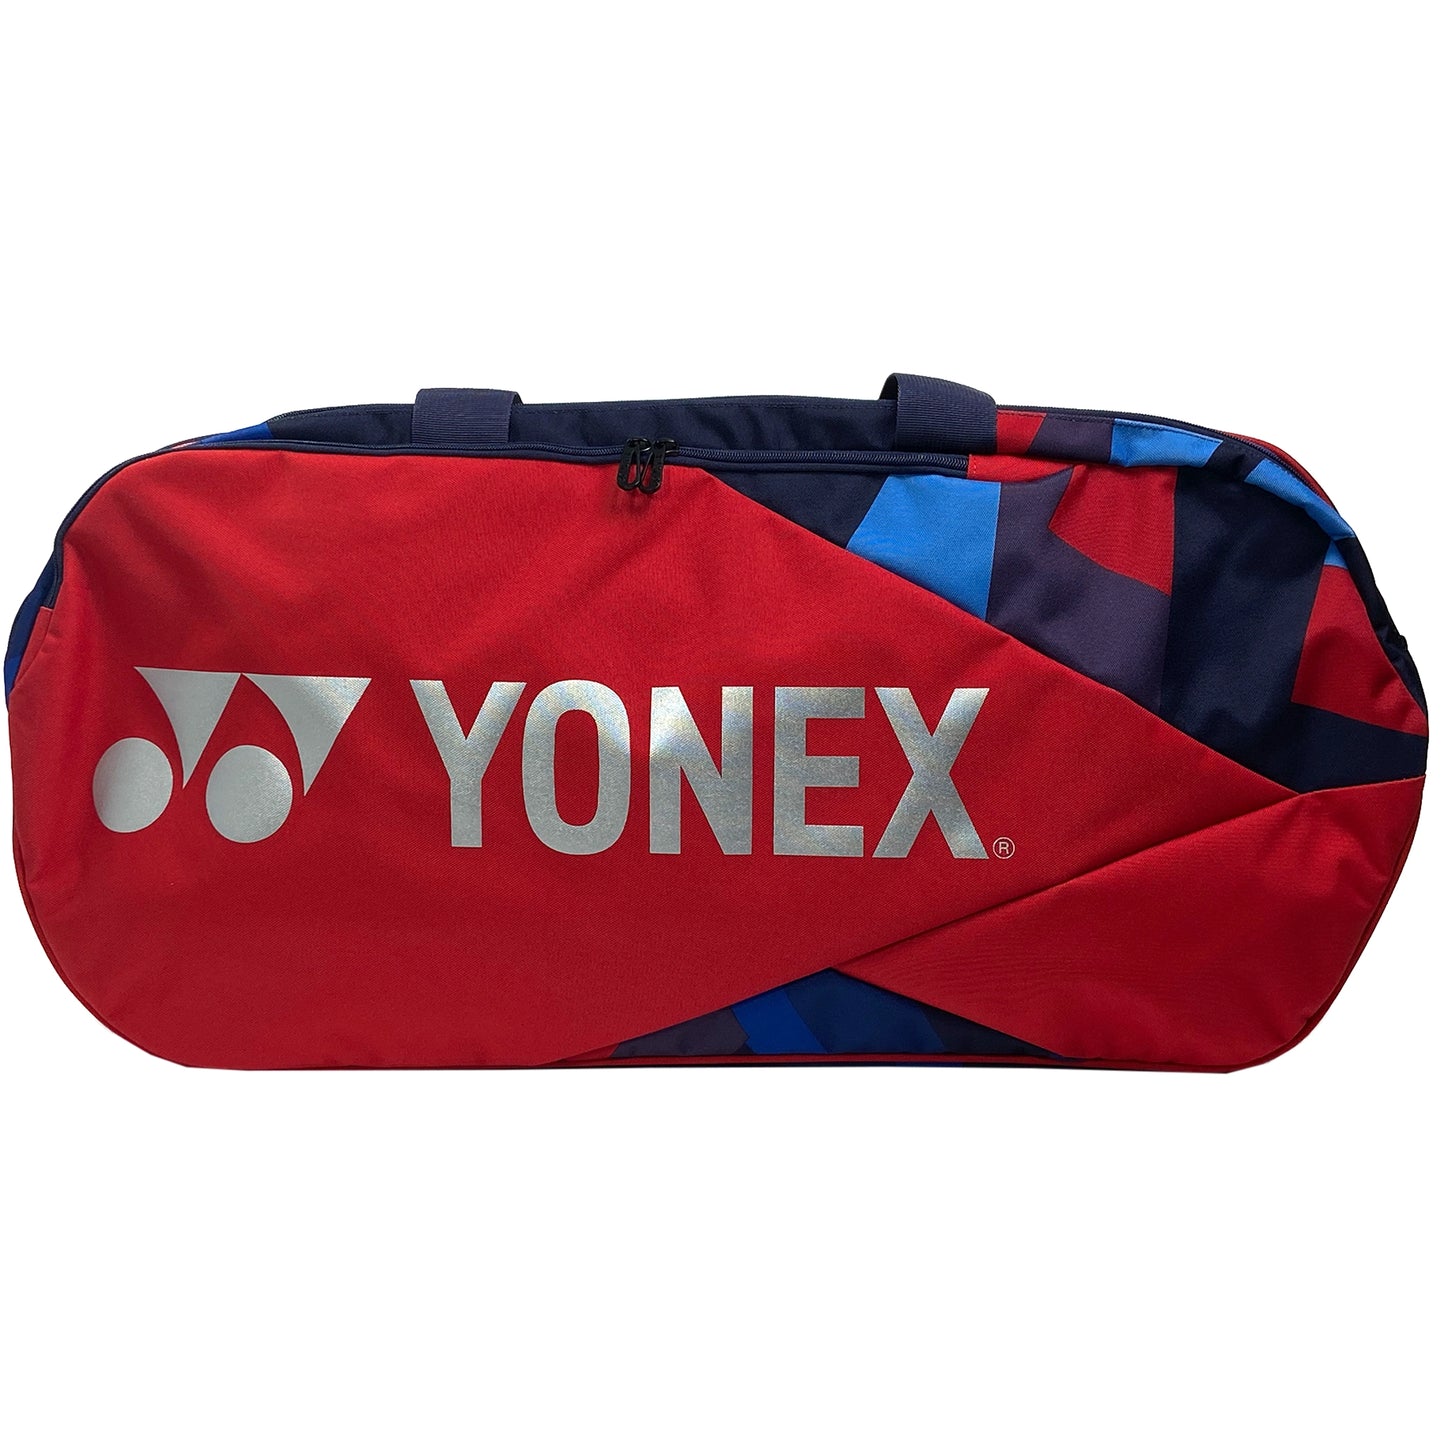 Yonex sac (92231WEX) Pro Tournament Rouge